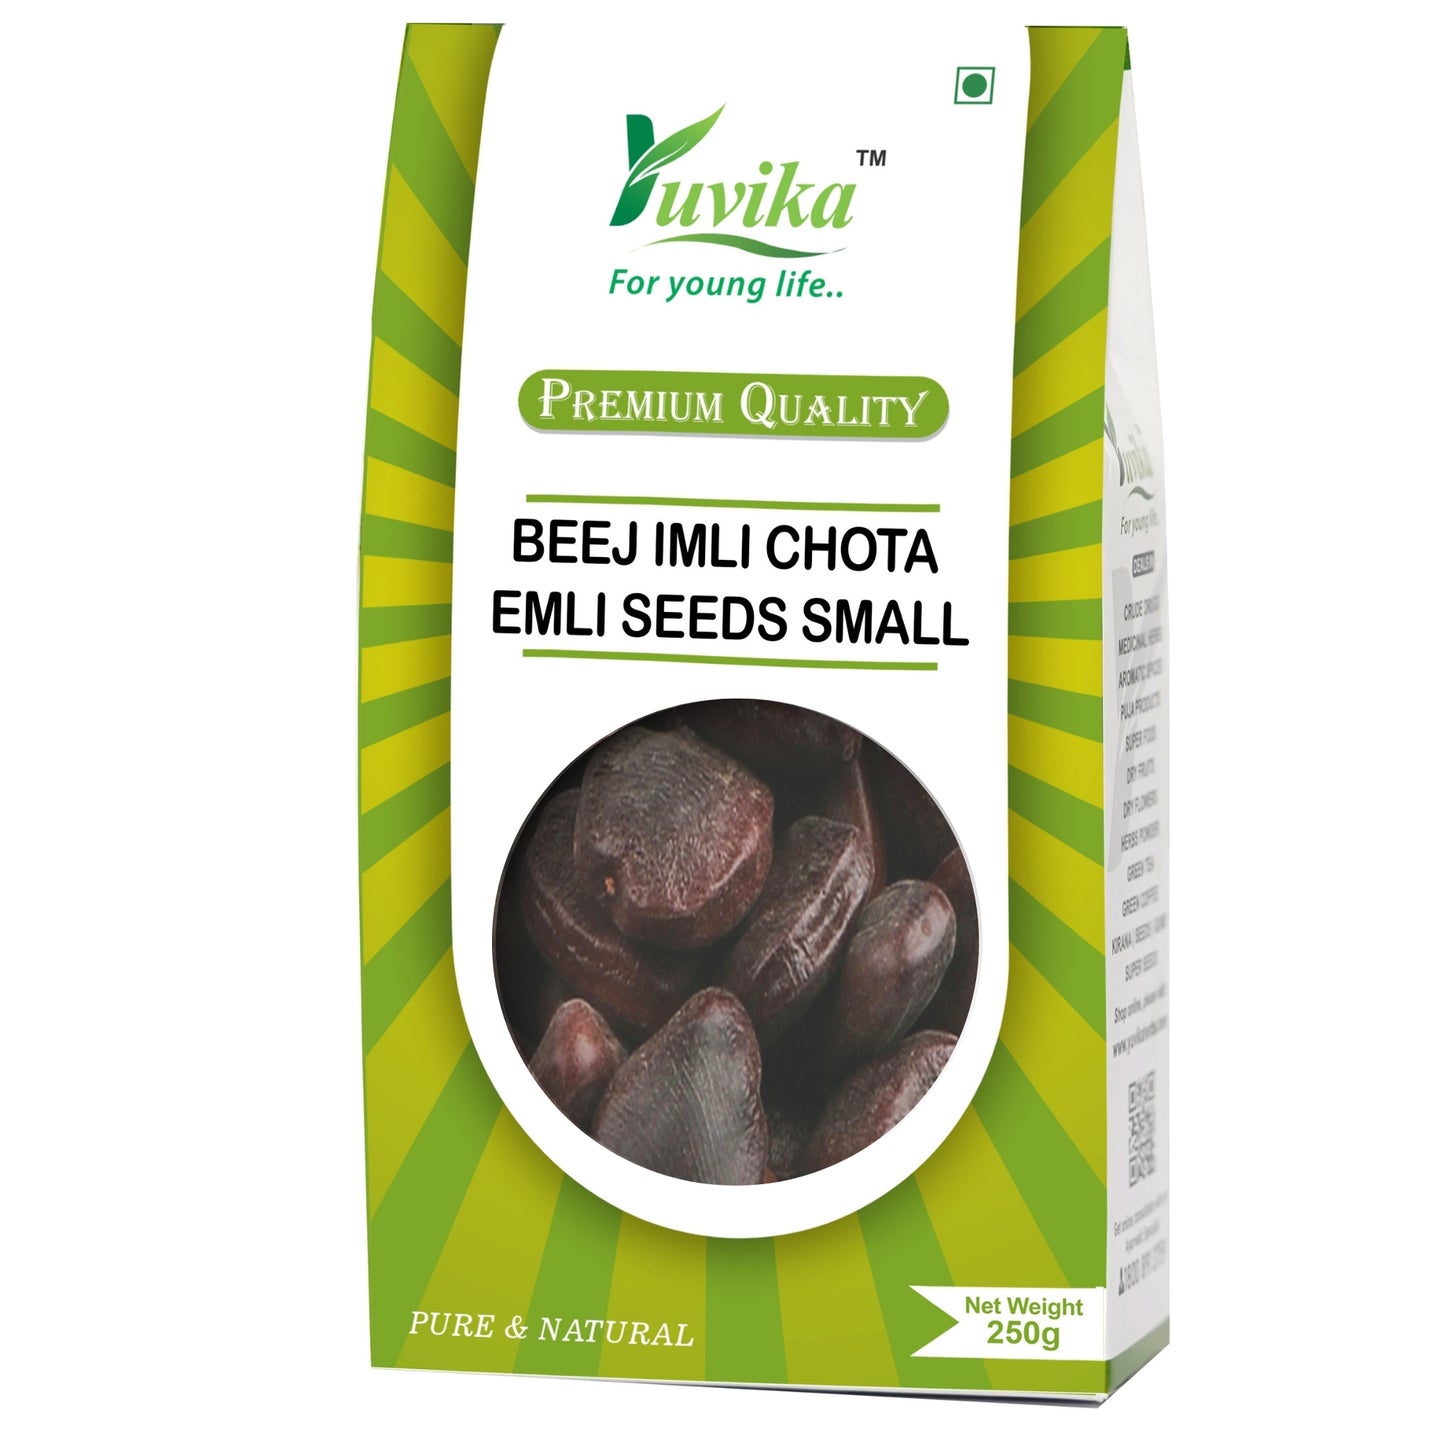 Beej Imli Chota - Tamarindus Indica - Emli Seeds Small  - Tamarind Seeds Small (250g)